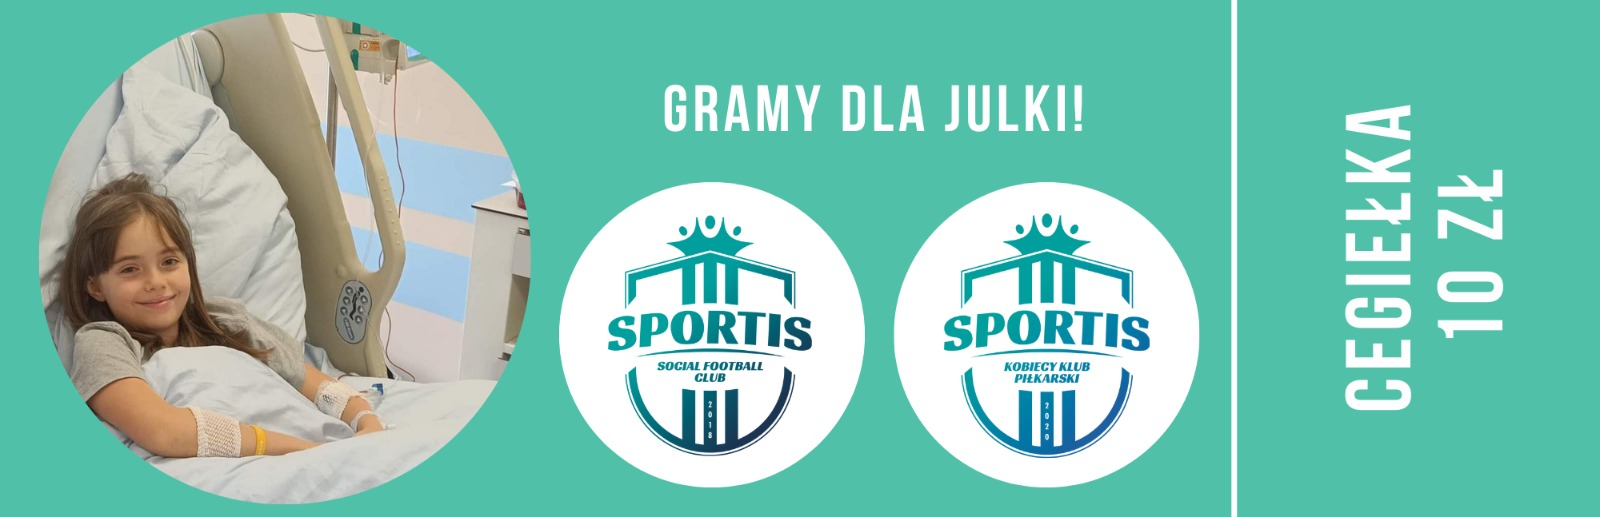 Sportis Social Football Club gra dla Julki!